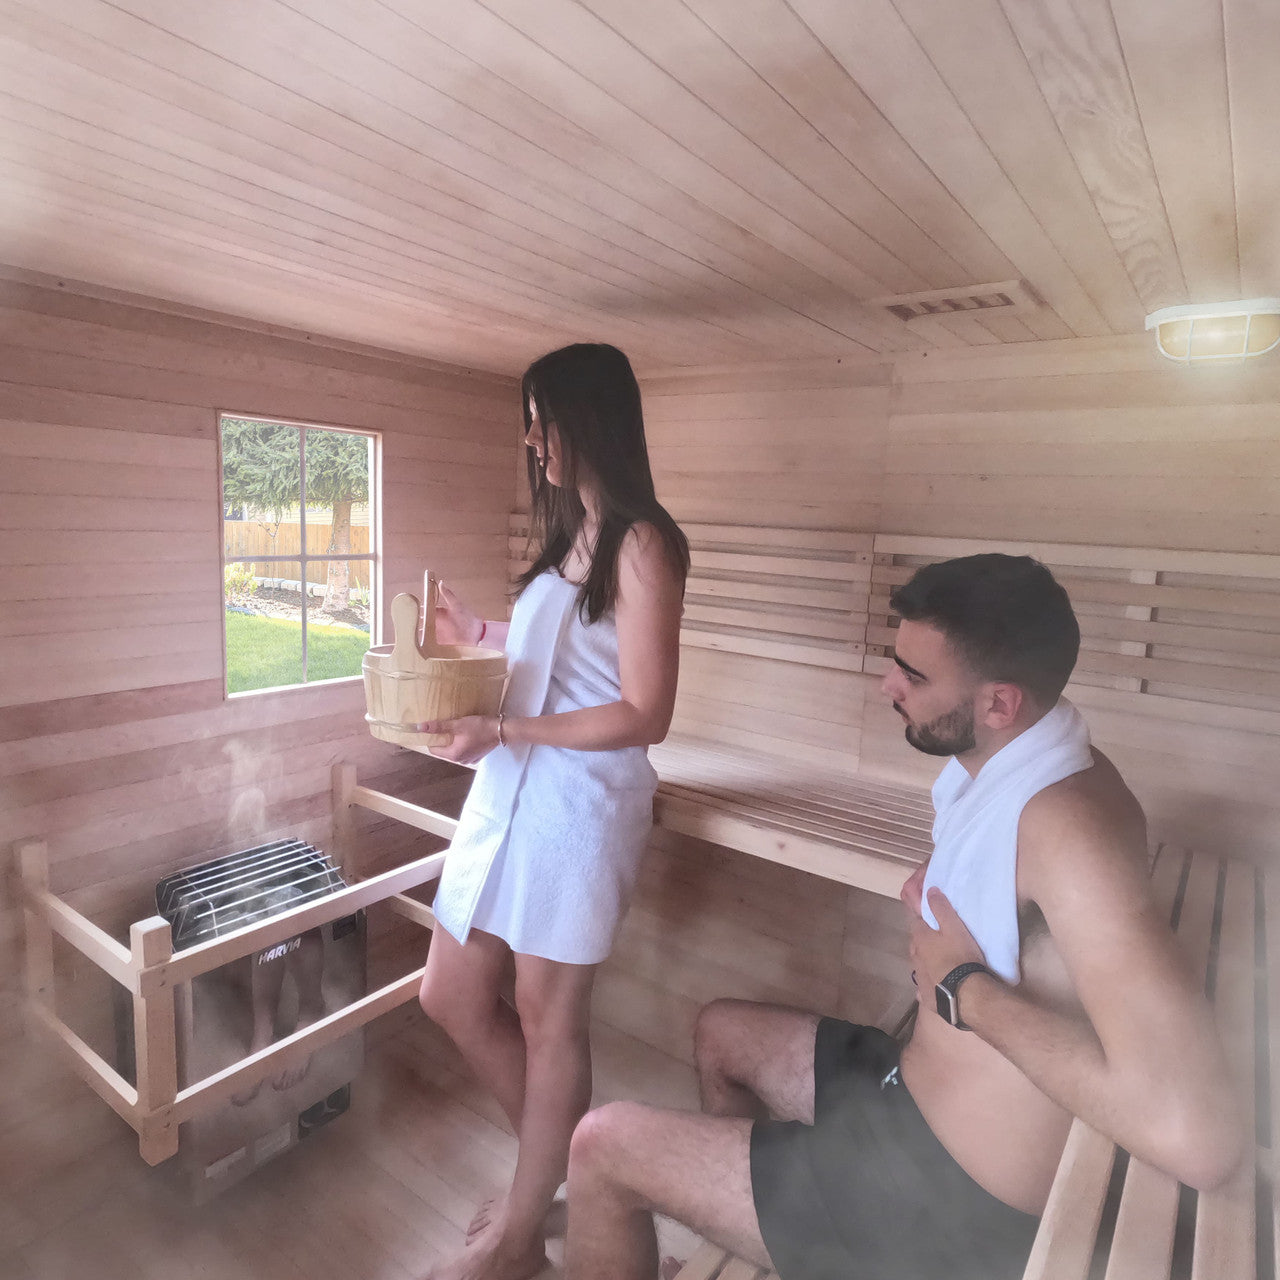 Aleko Canadian Hemlock Wet Dry Outdoor Sauna with Asphalt Roof - 8 kW UL Certified Heater - 8 Person SKD8HEM-AP - Serenity Provision